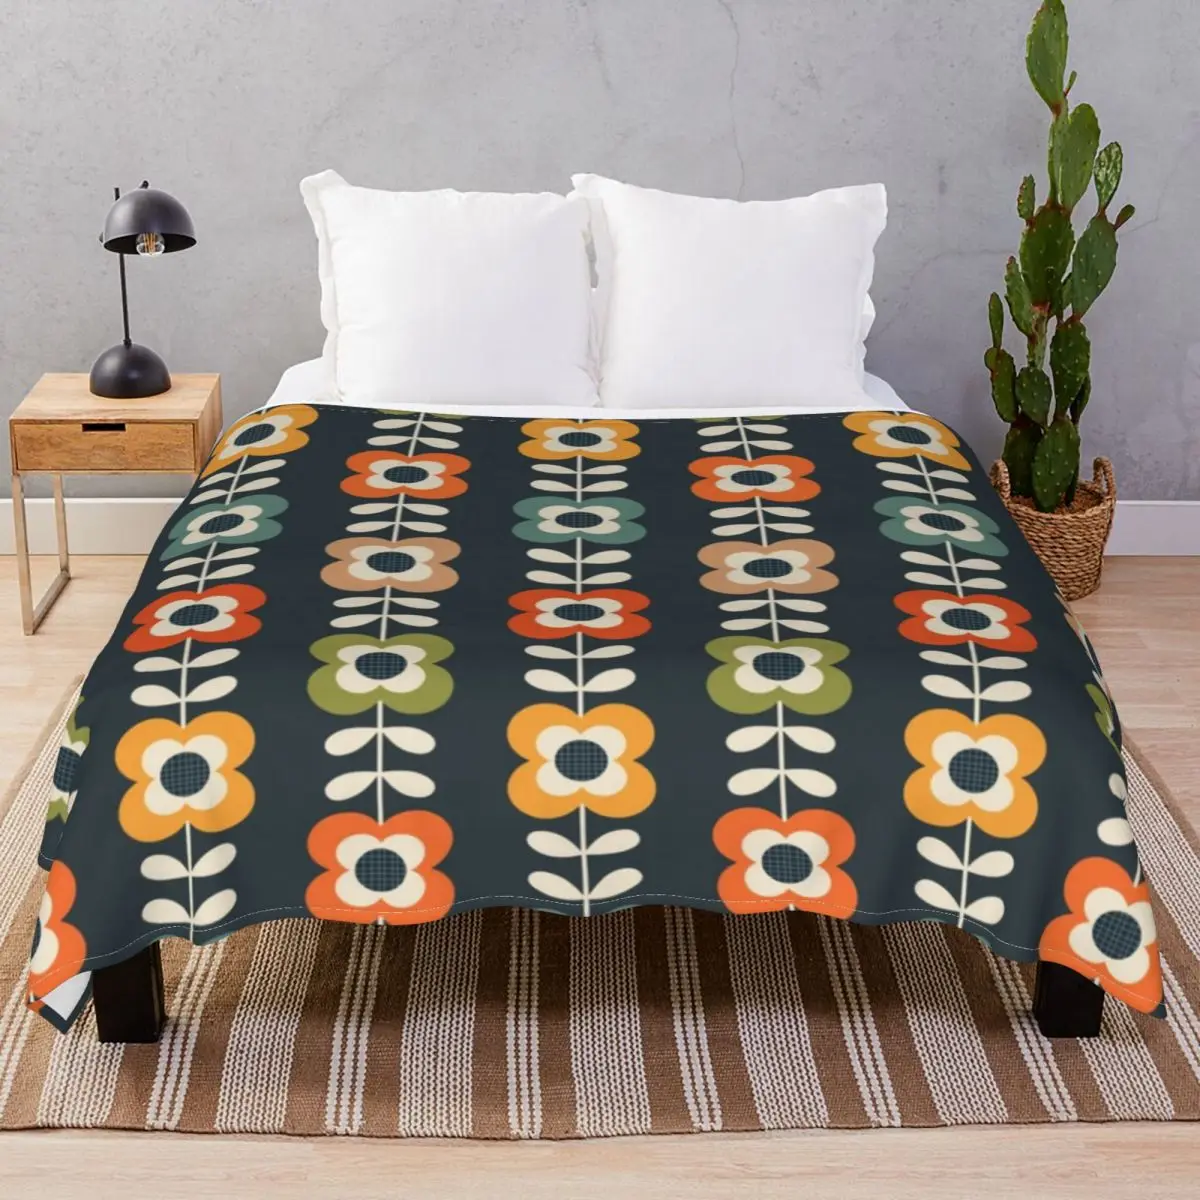 Mod Flowers In Retro Colors Blankets Fleece Autumn Warm Unisex Throw Blanket for Bed Sofa Travel Cinema